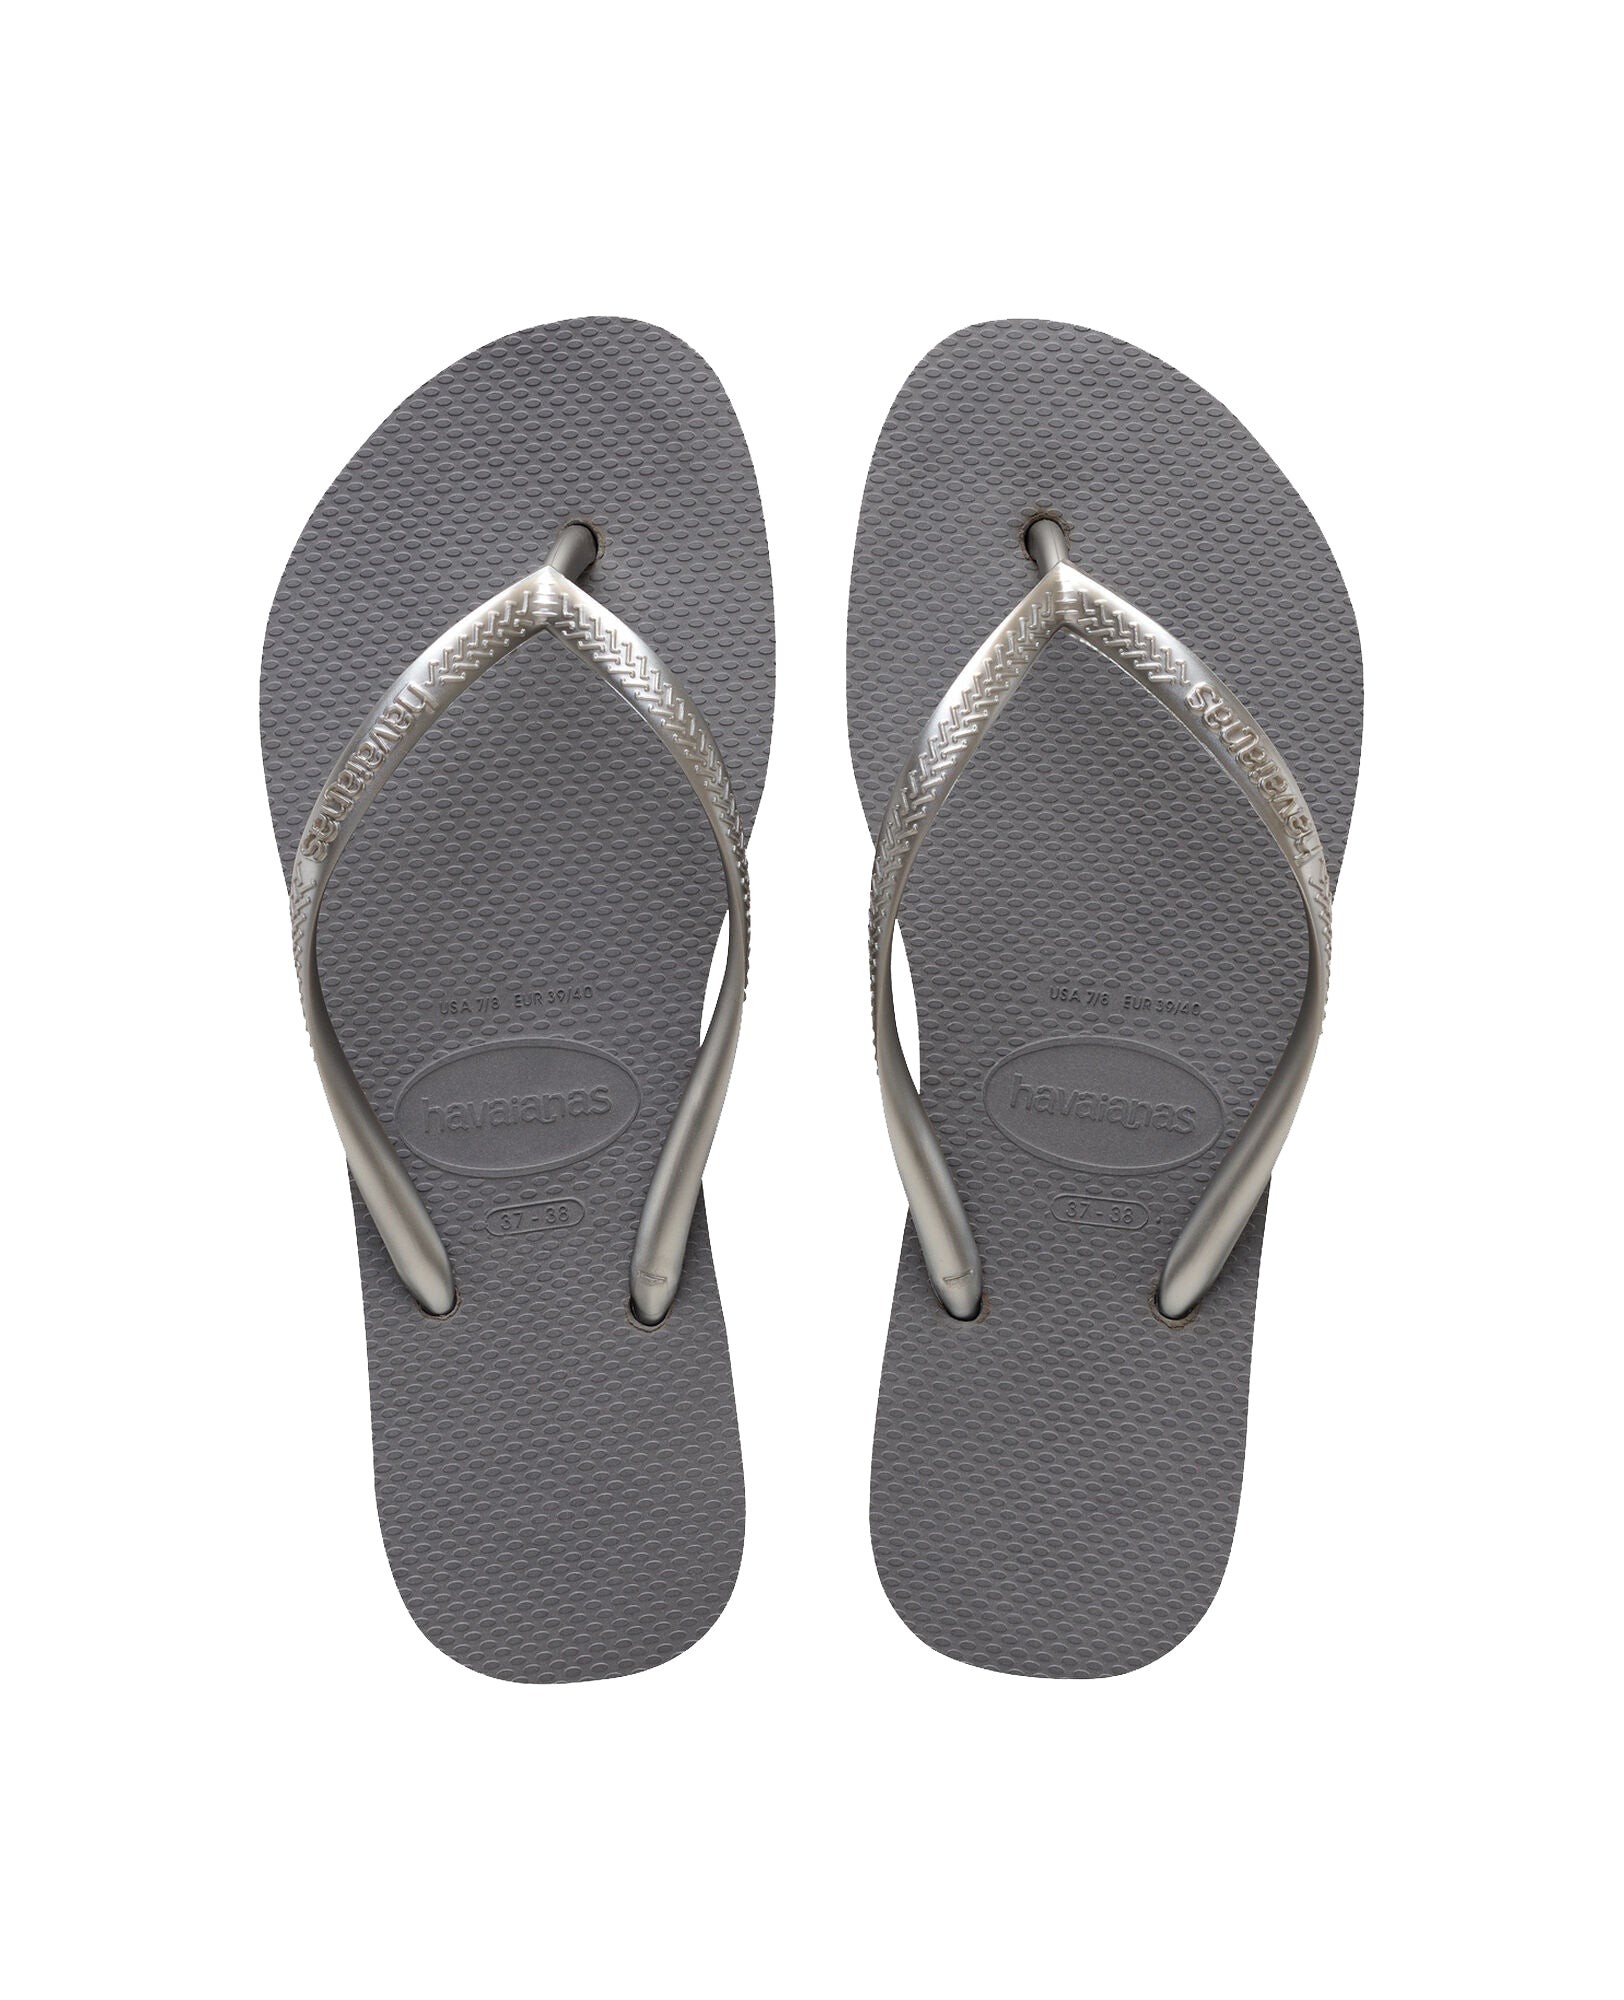 Havaianas Slim Flatform Womens Sandal 5178-Steel Grey 11